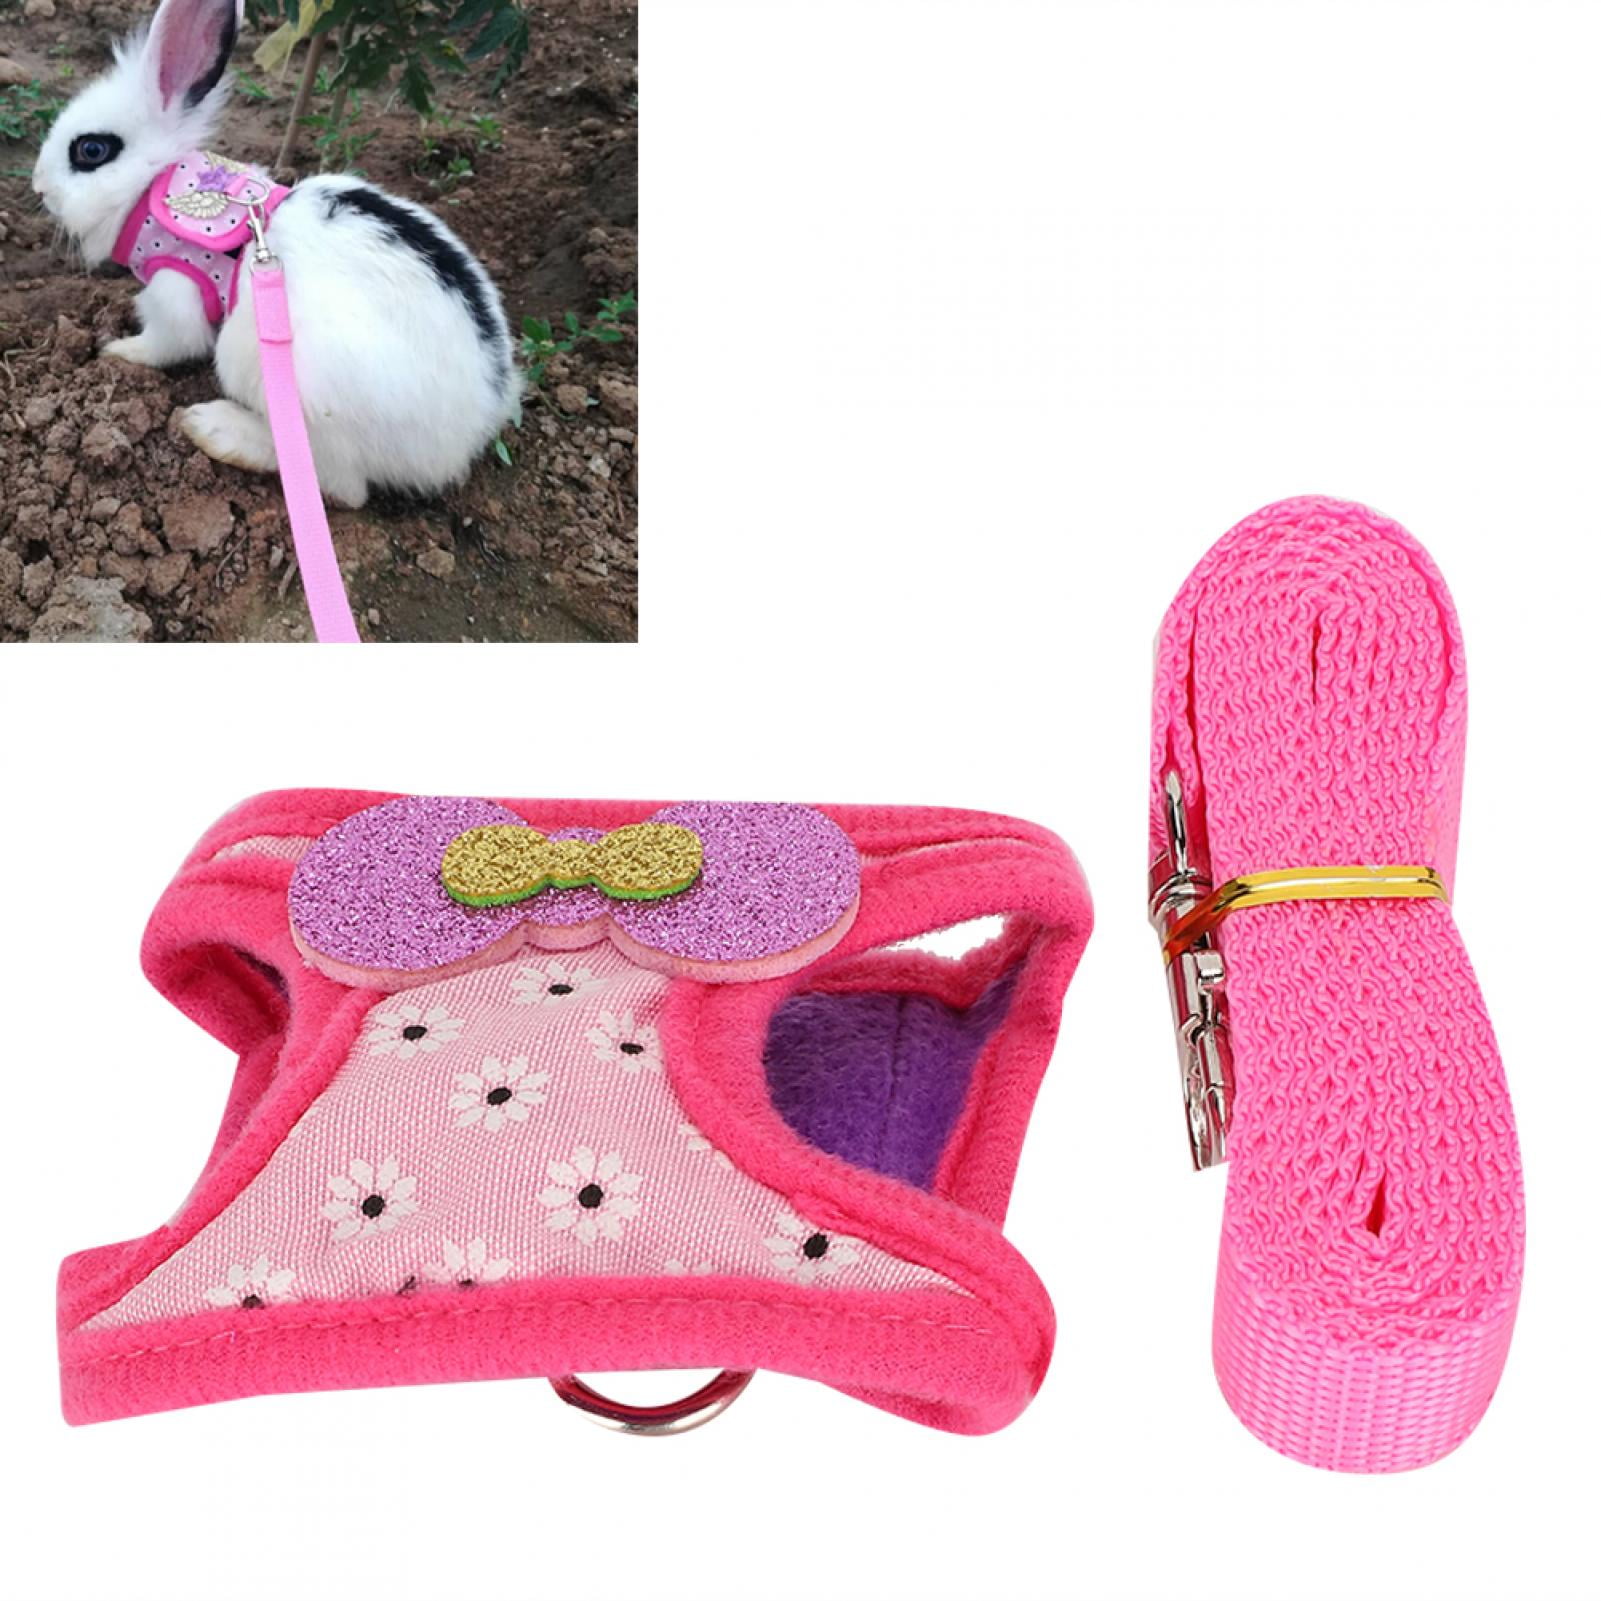 Brrnoo Small Pet Animal Leash Harness Set Comfortable Chest Strap Traction Vest for Rabbit Hamster Guinea Pig Pet Supplies Pet Harness